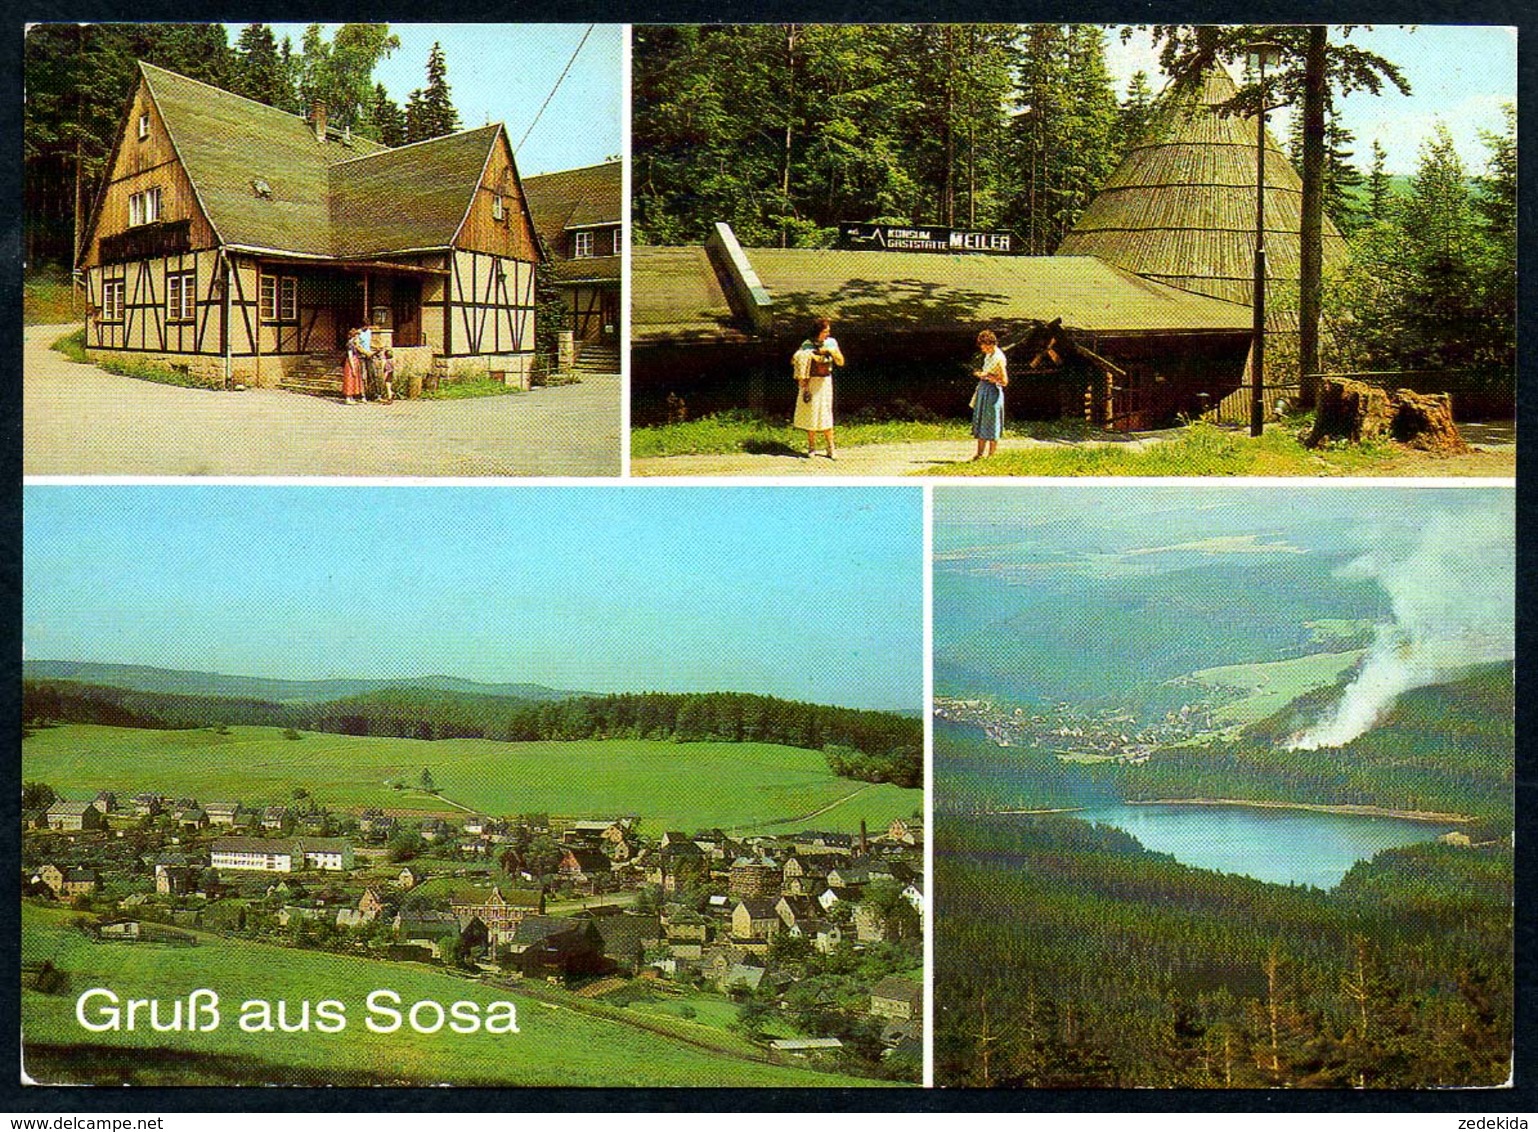 B5109 - Köhler Hütte Konsum Gaststätte Meiler - Sosa Bei Eibenstock - Reichenbach - Sosa